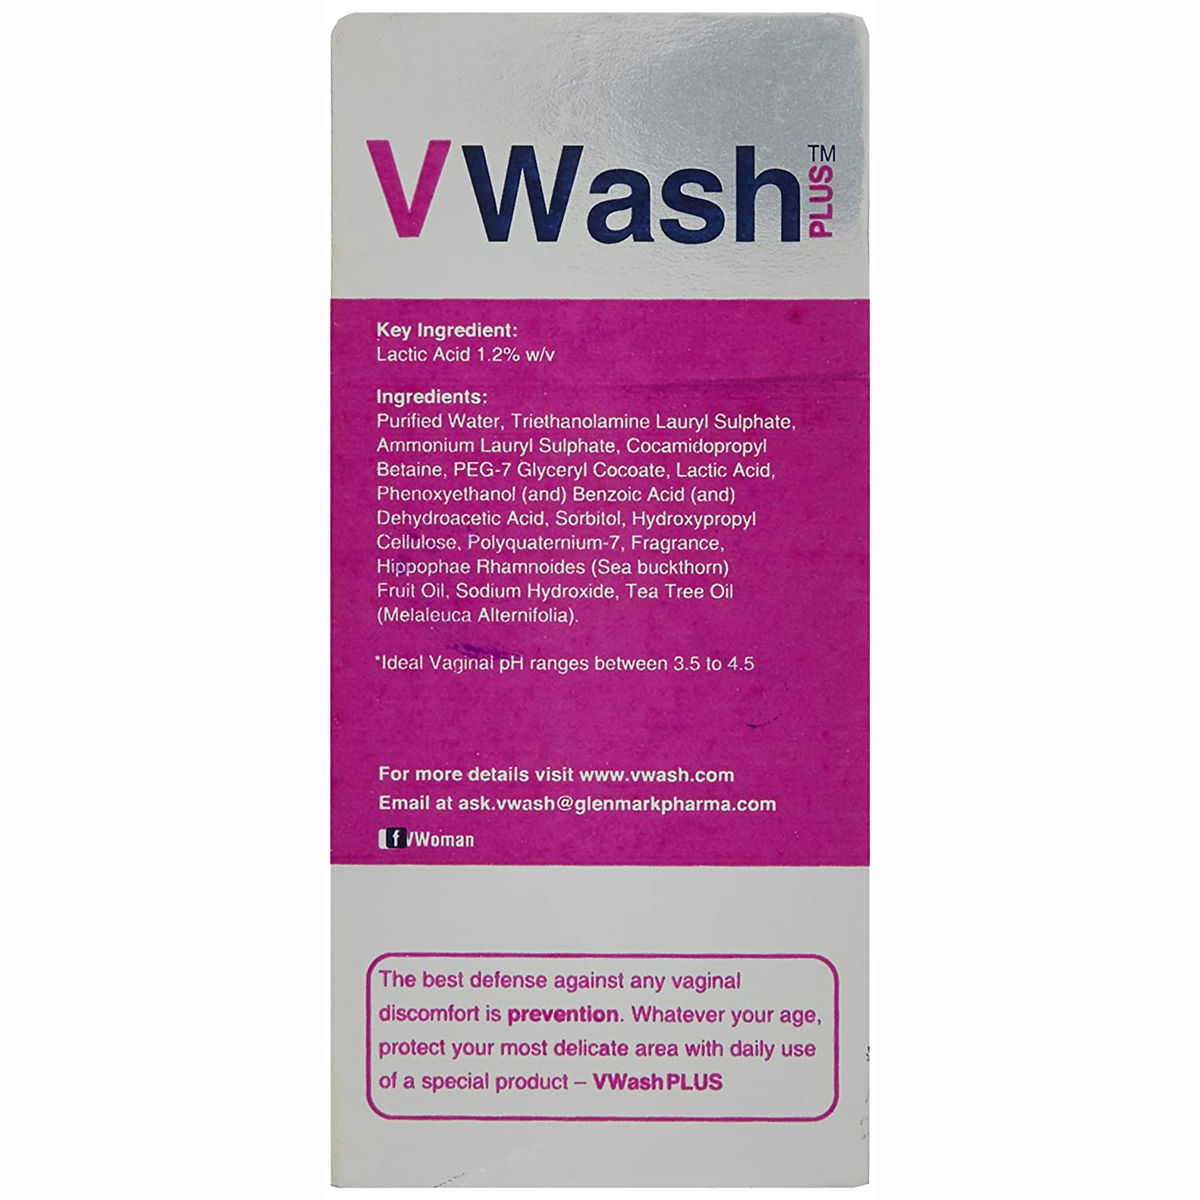 VWash Plus Expert Intimate Hygiene Wash, 20 ml, Pack of 1 